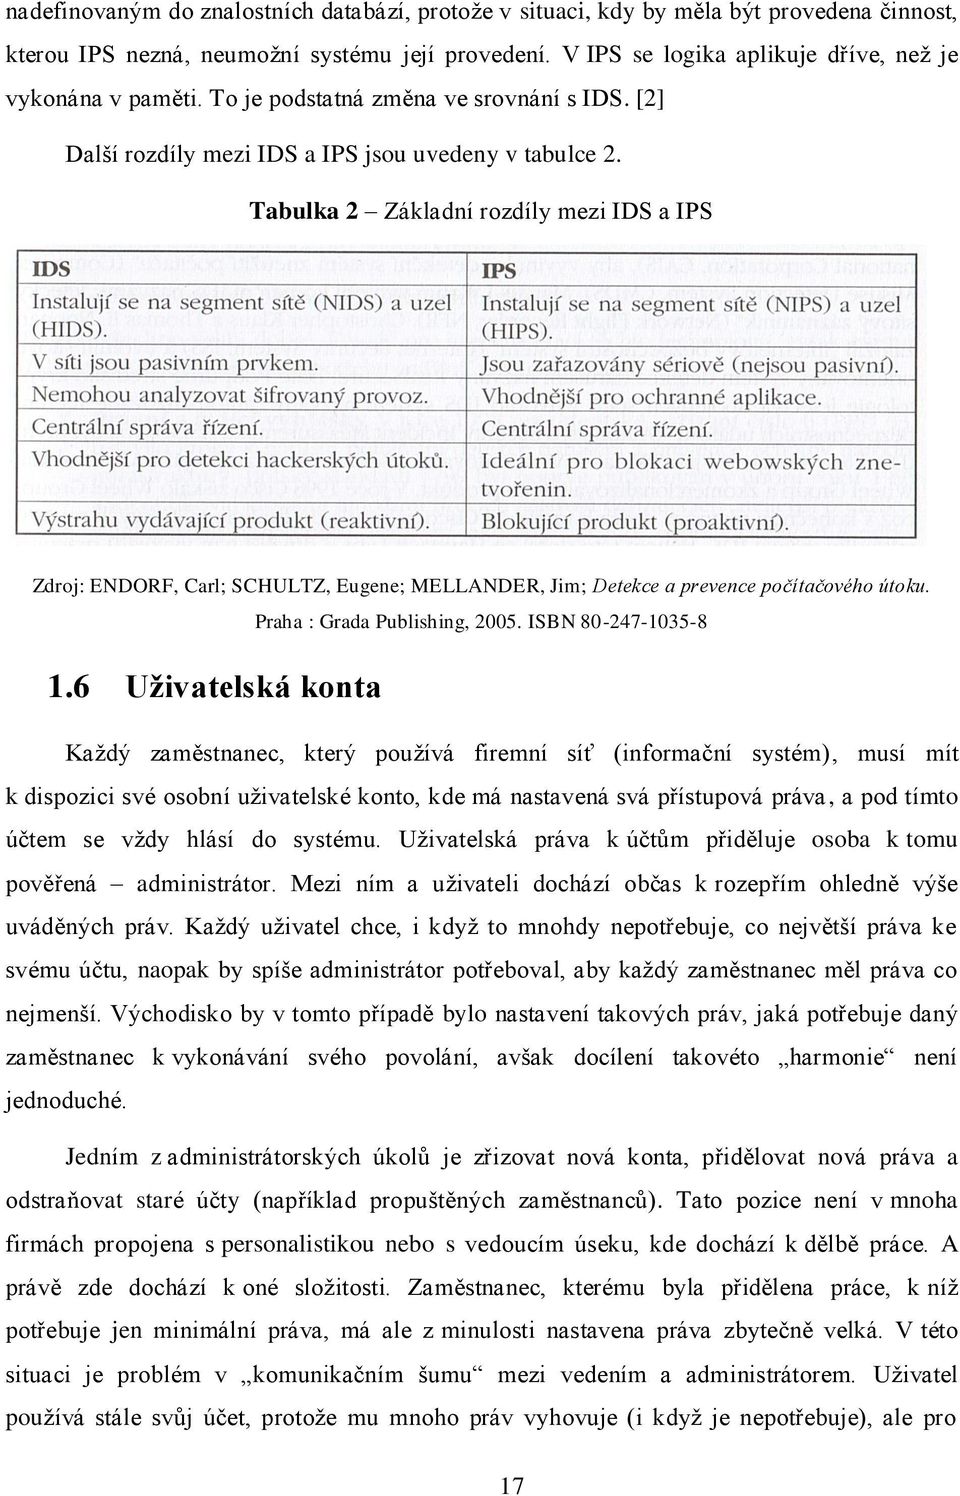 Tabulka 2 Základní rozdíly mezi IDS a IPS Zdroj: ENDORF, Carl; SCHULTZ, Eugene; MELLANDER, Jim; Detekce a prevence počítačového útoku. Praha : Grada Publishing, 2005. ISBN 80-247-1035-8 1.